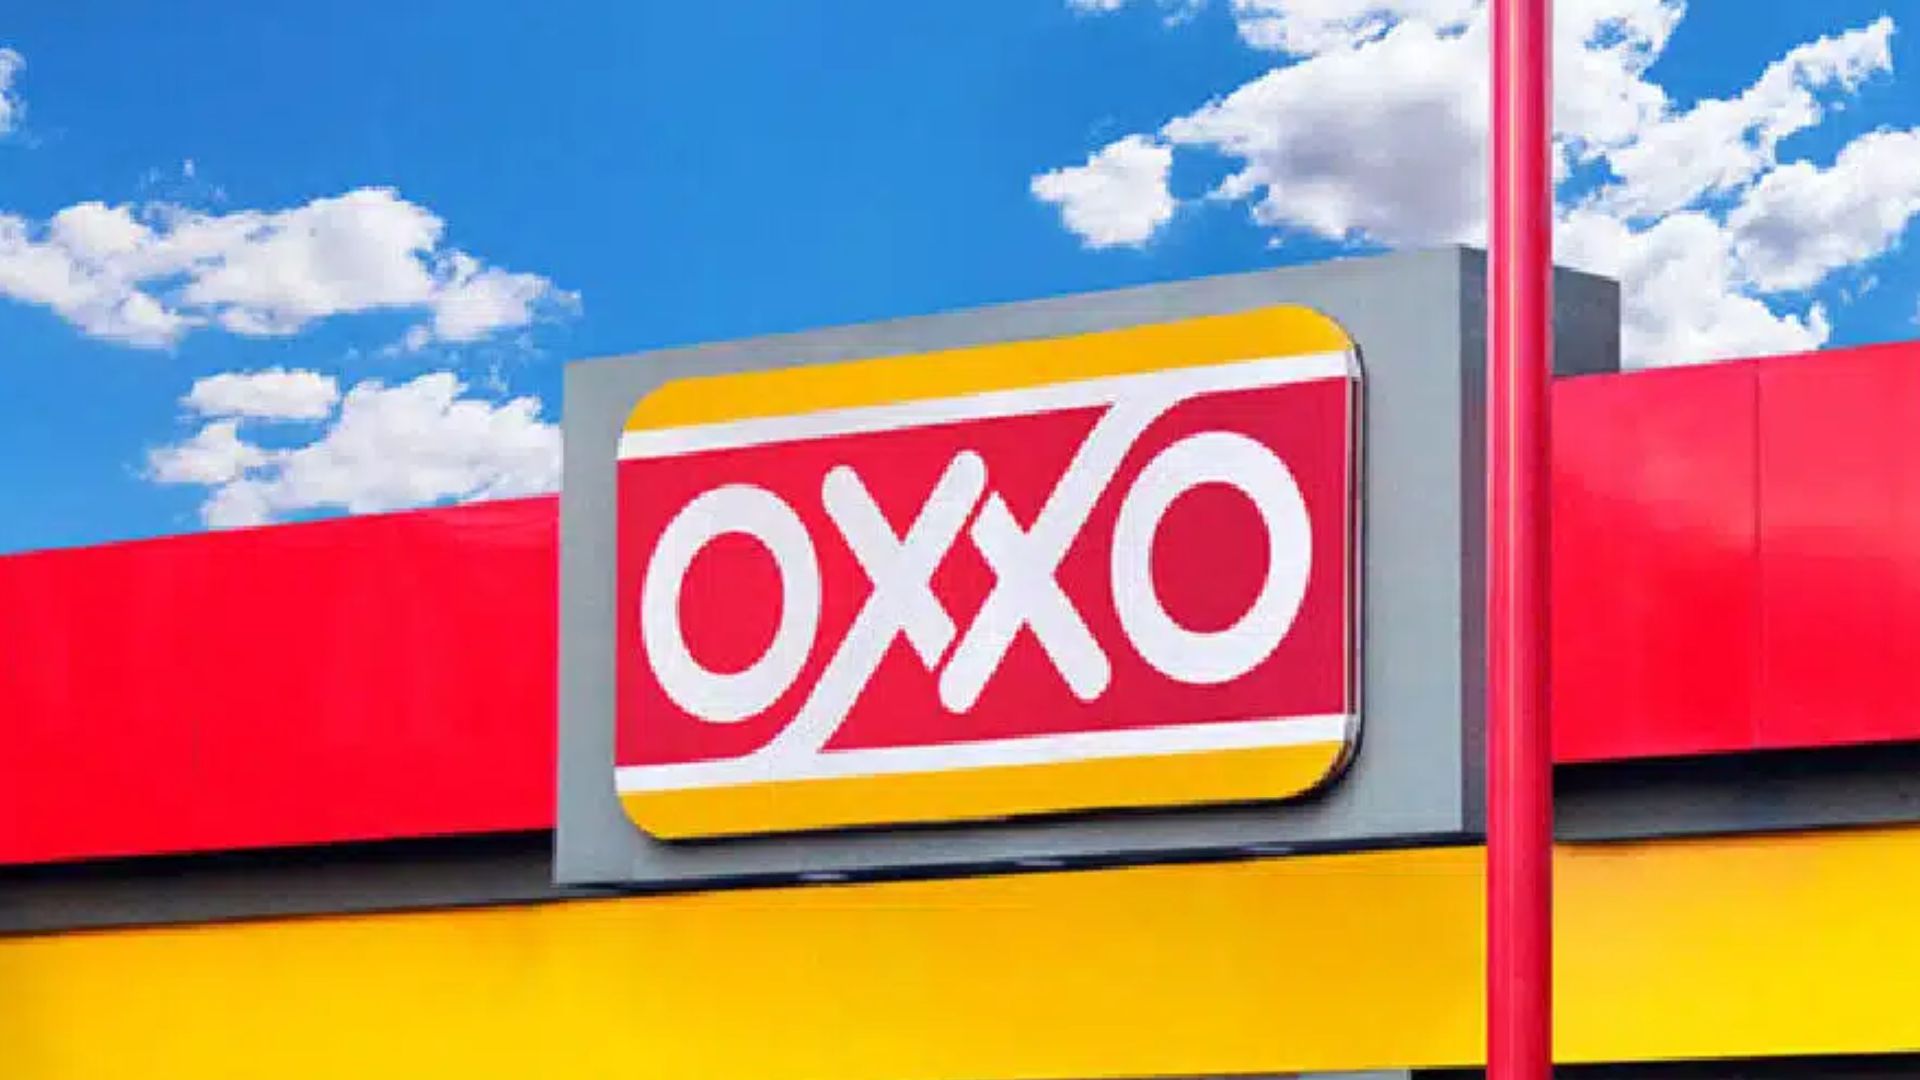 Oxxo, de la Tienda de la Esquina a un Gigante Latinoamericano